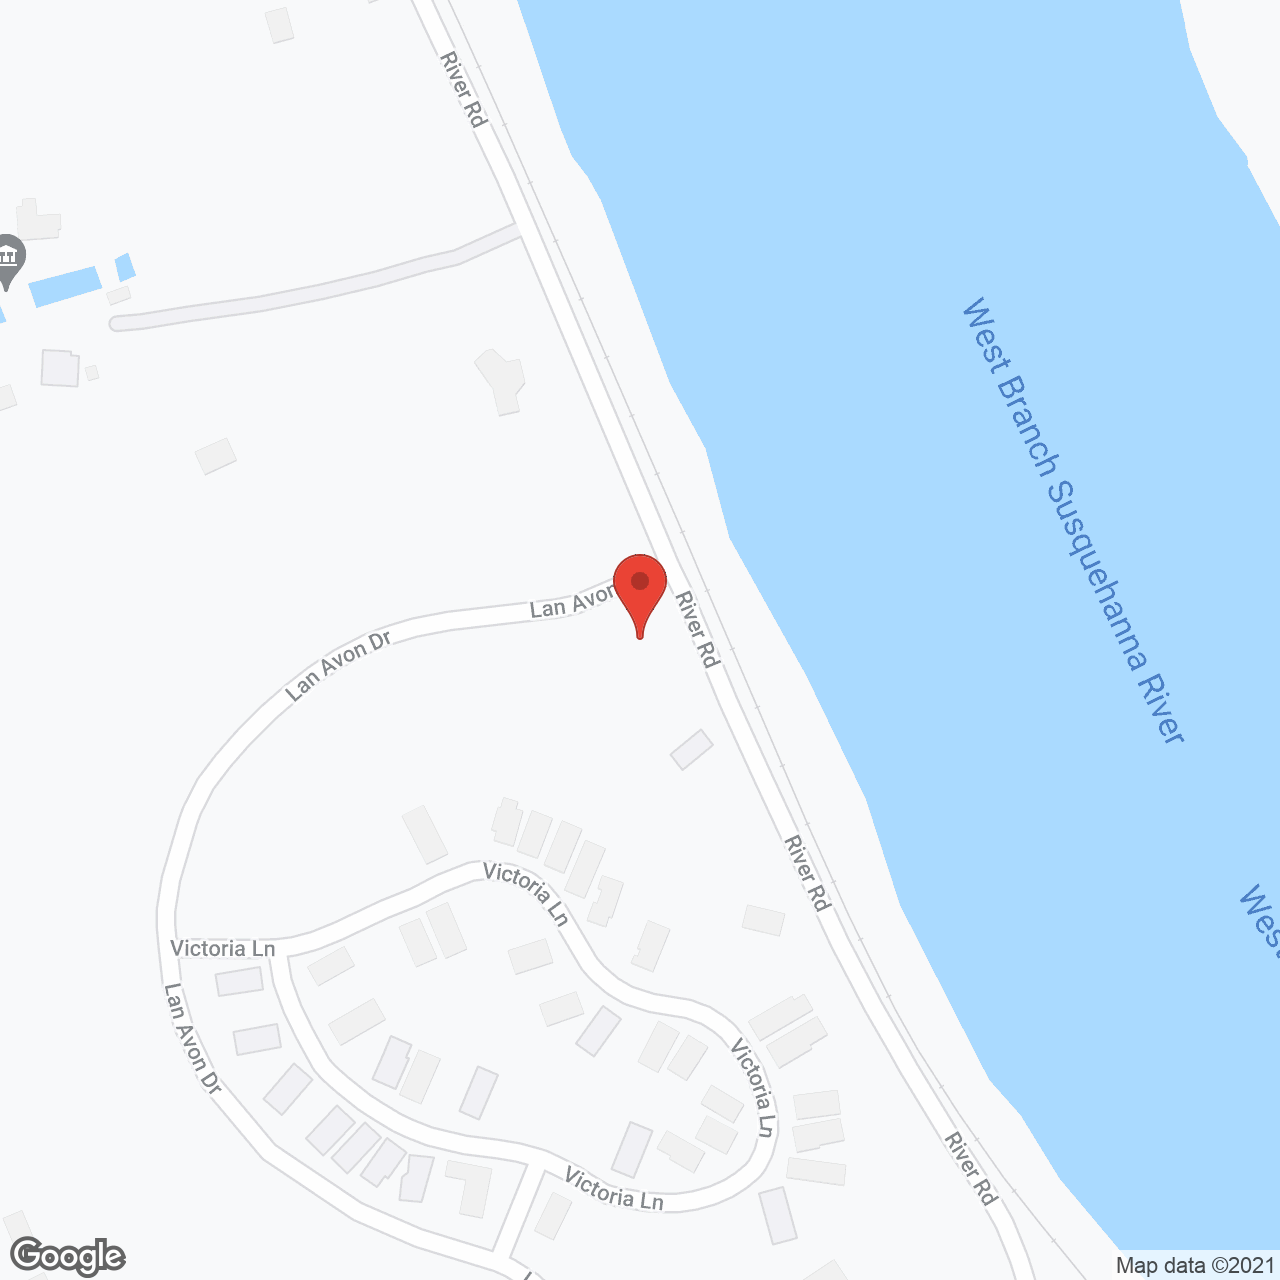 RiverWoods in google map